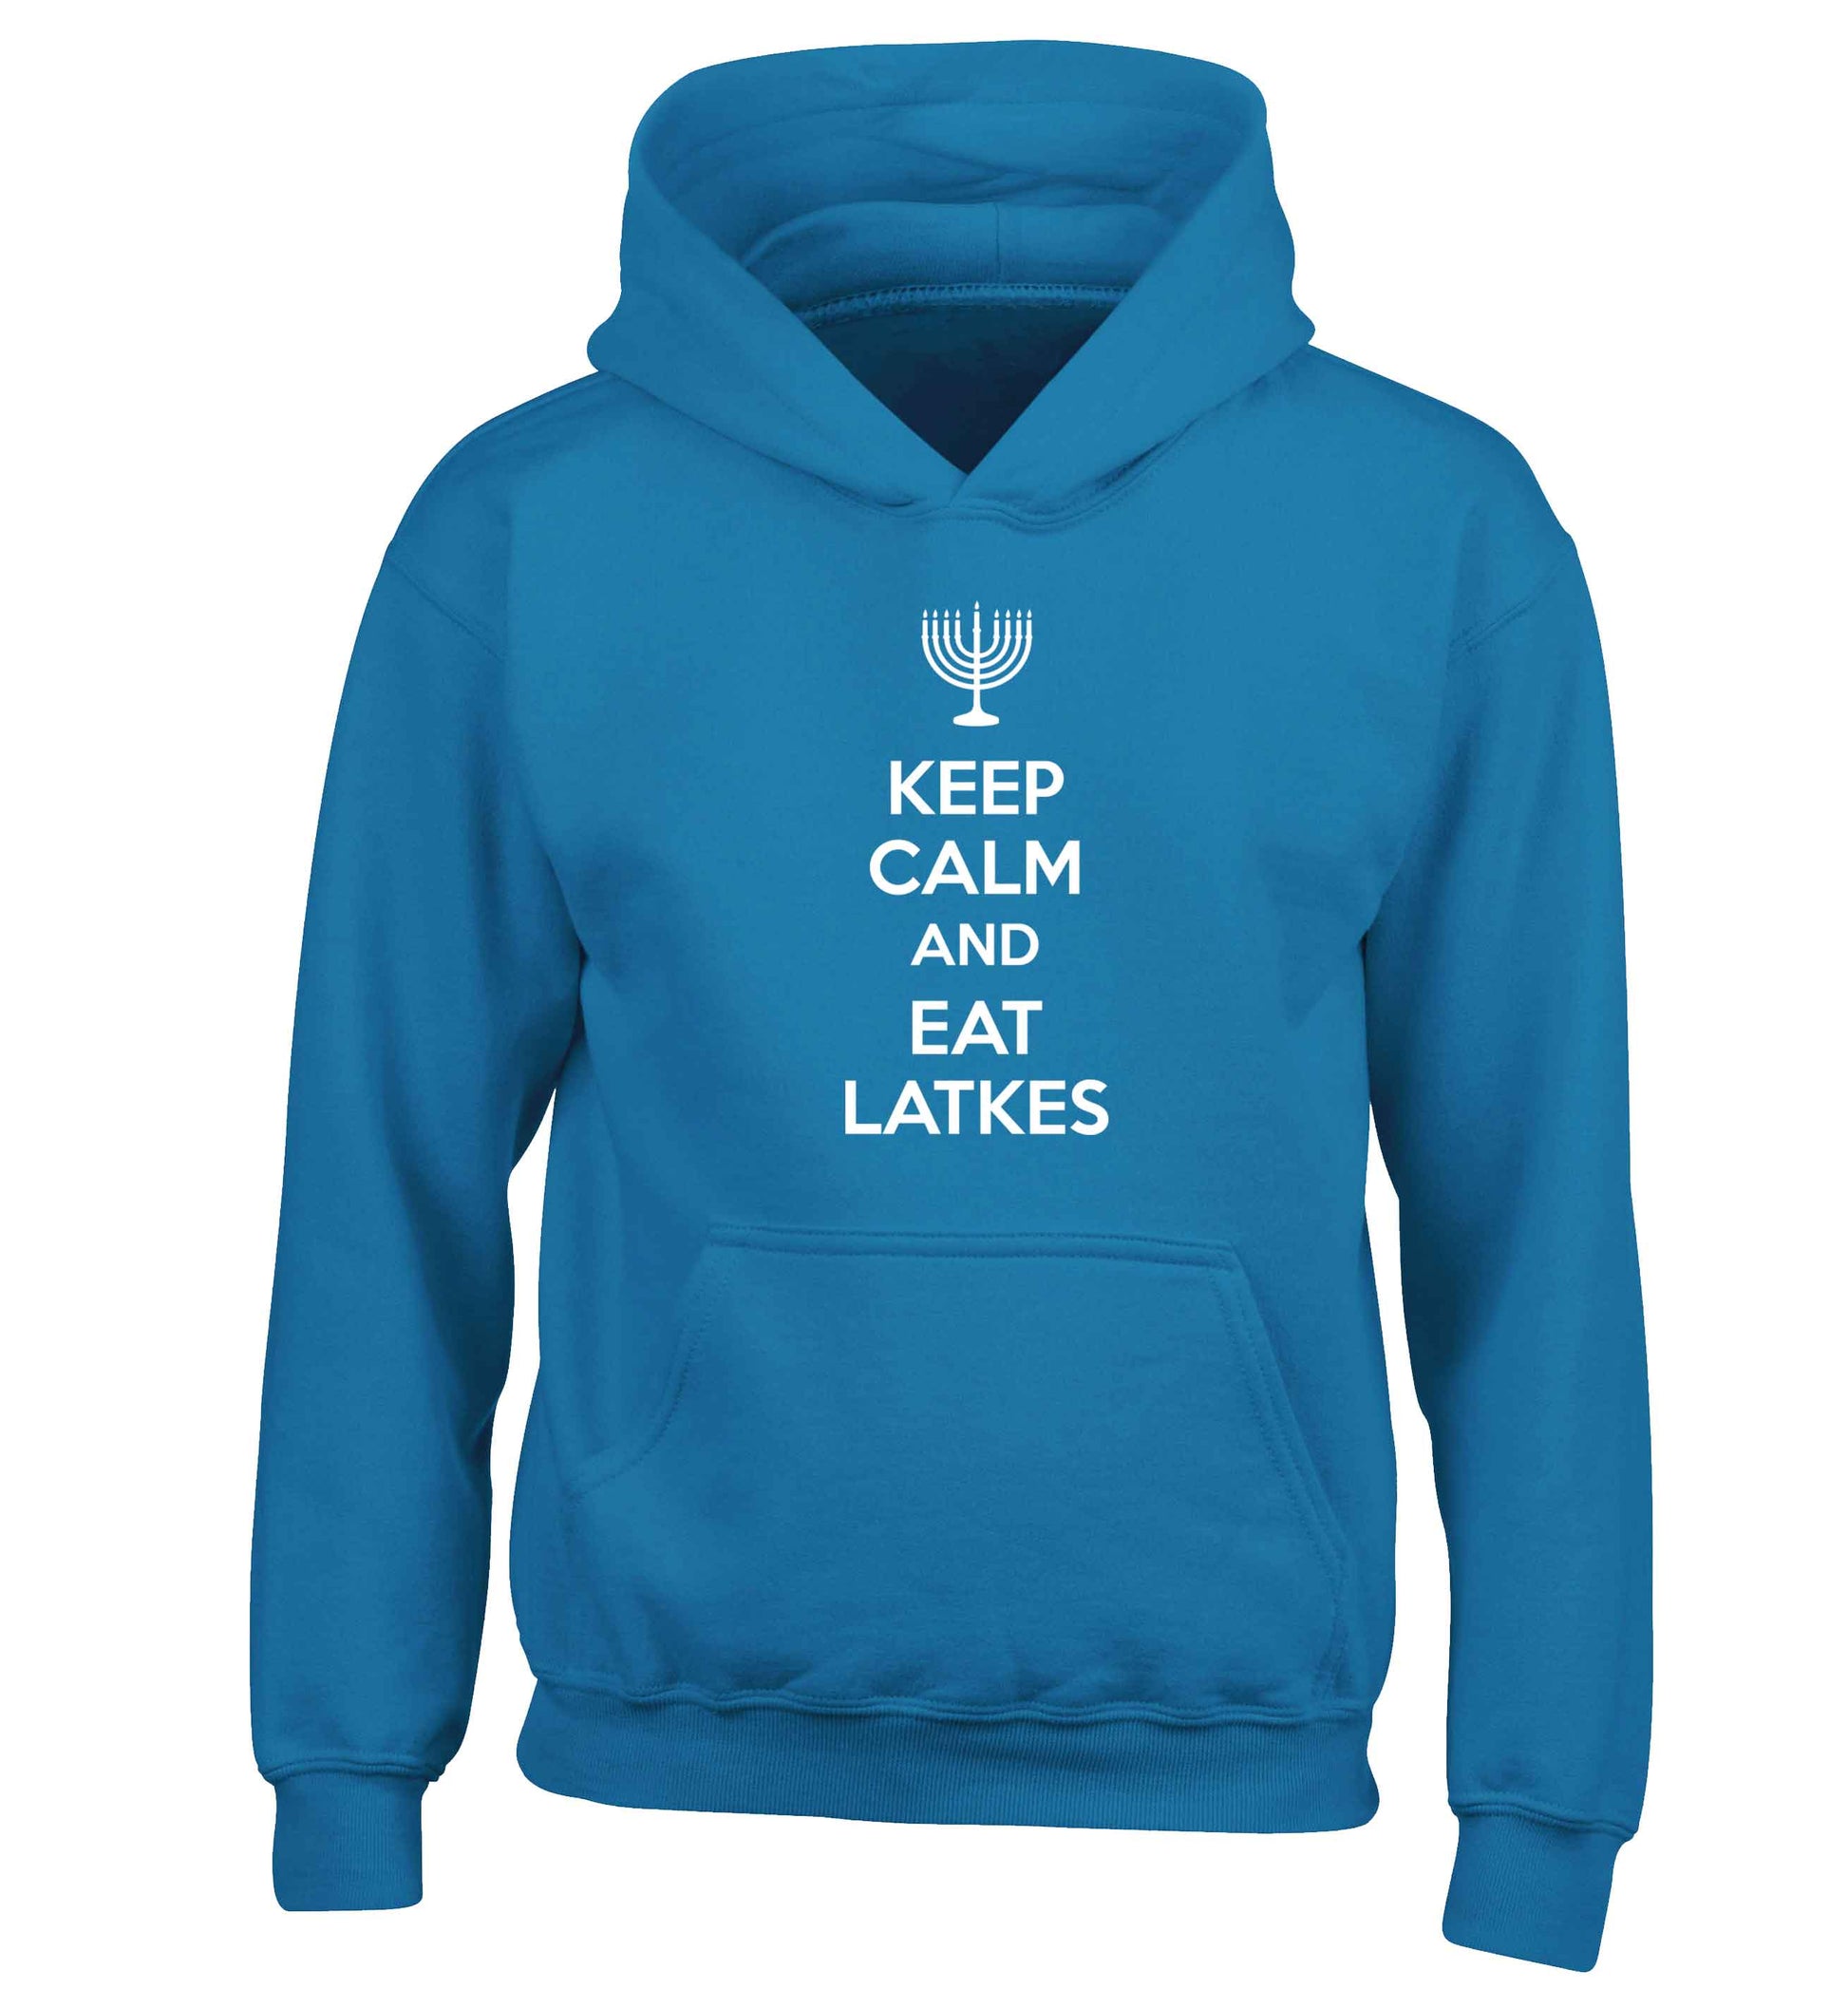 Keep calm and eat latkes children's blue hoodie 12-13 Years